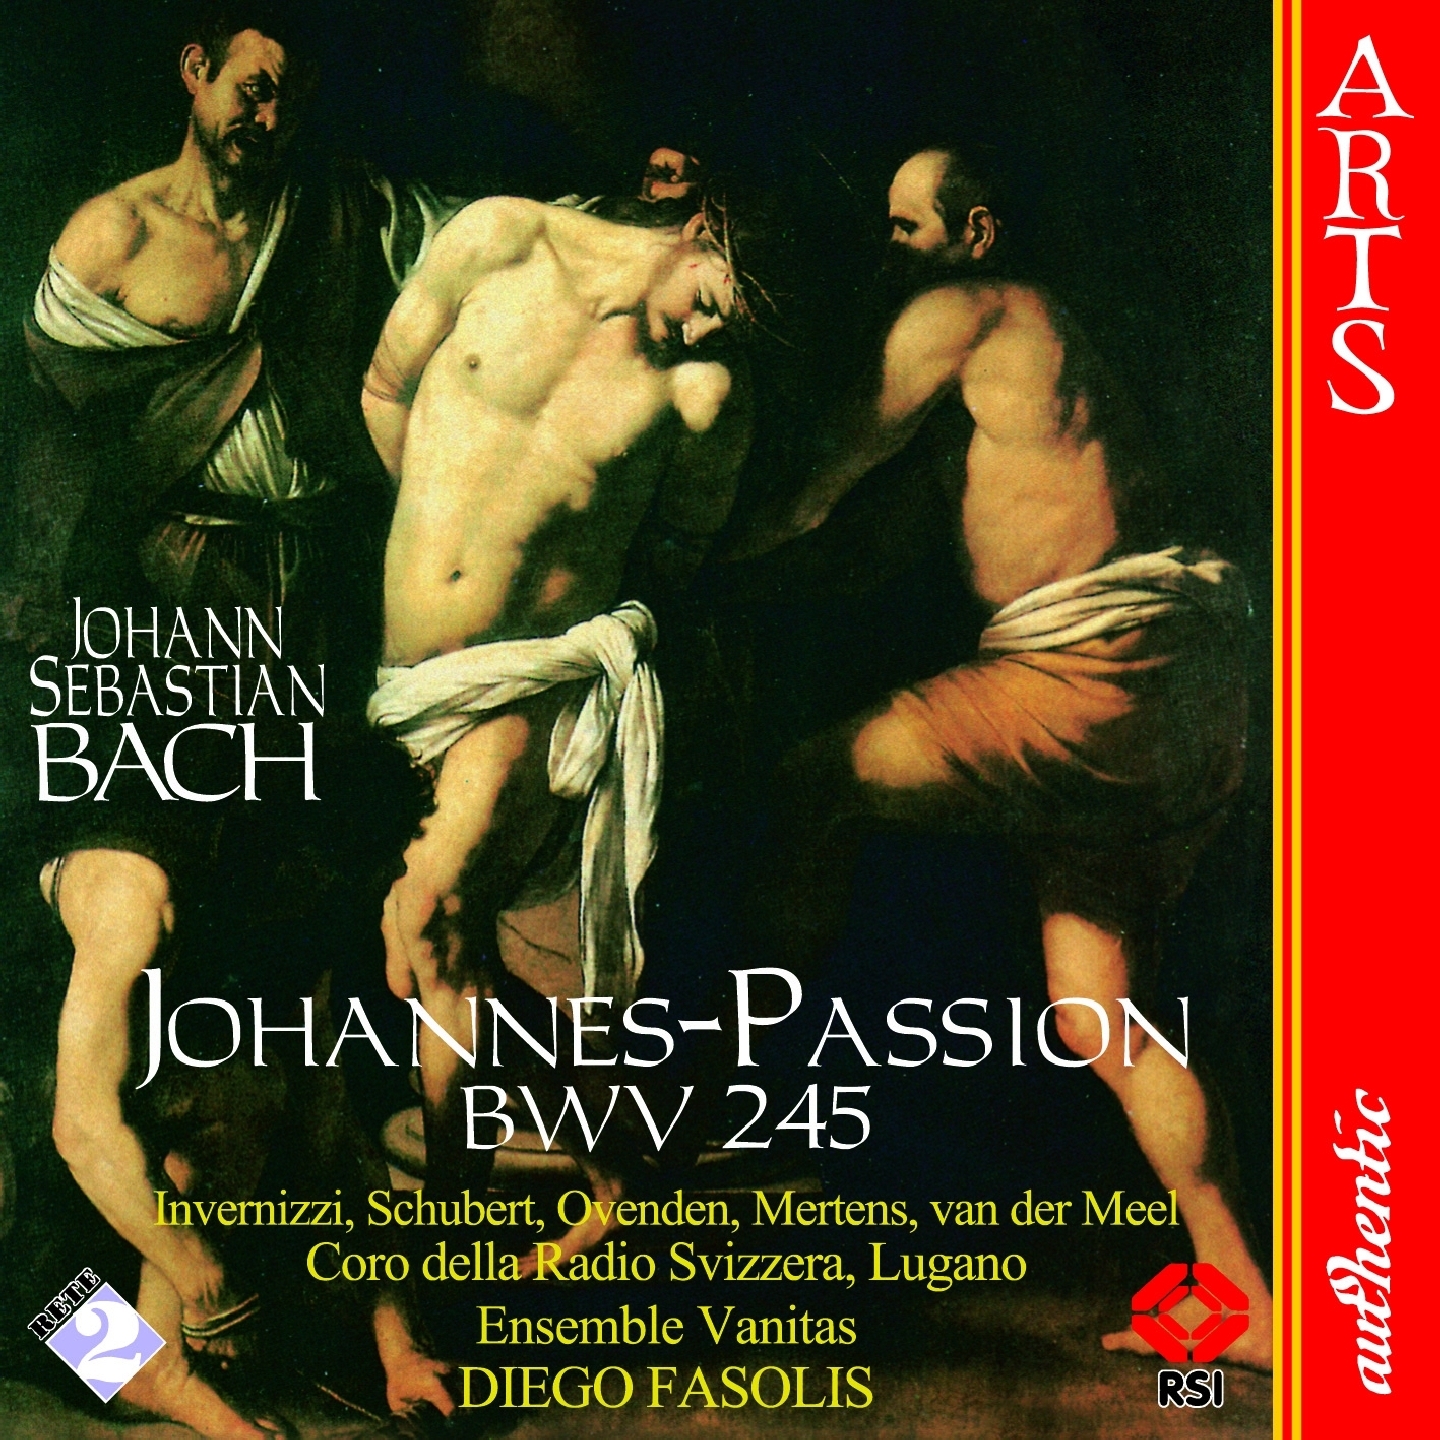 Johannes-Passion, BWV 245, Part I: 9. Aria "Ich folge dir gleichfalls" (Soprano)